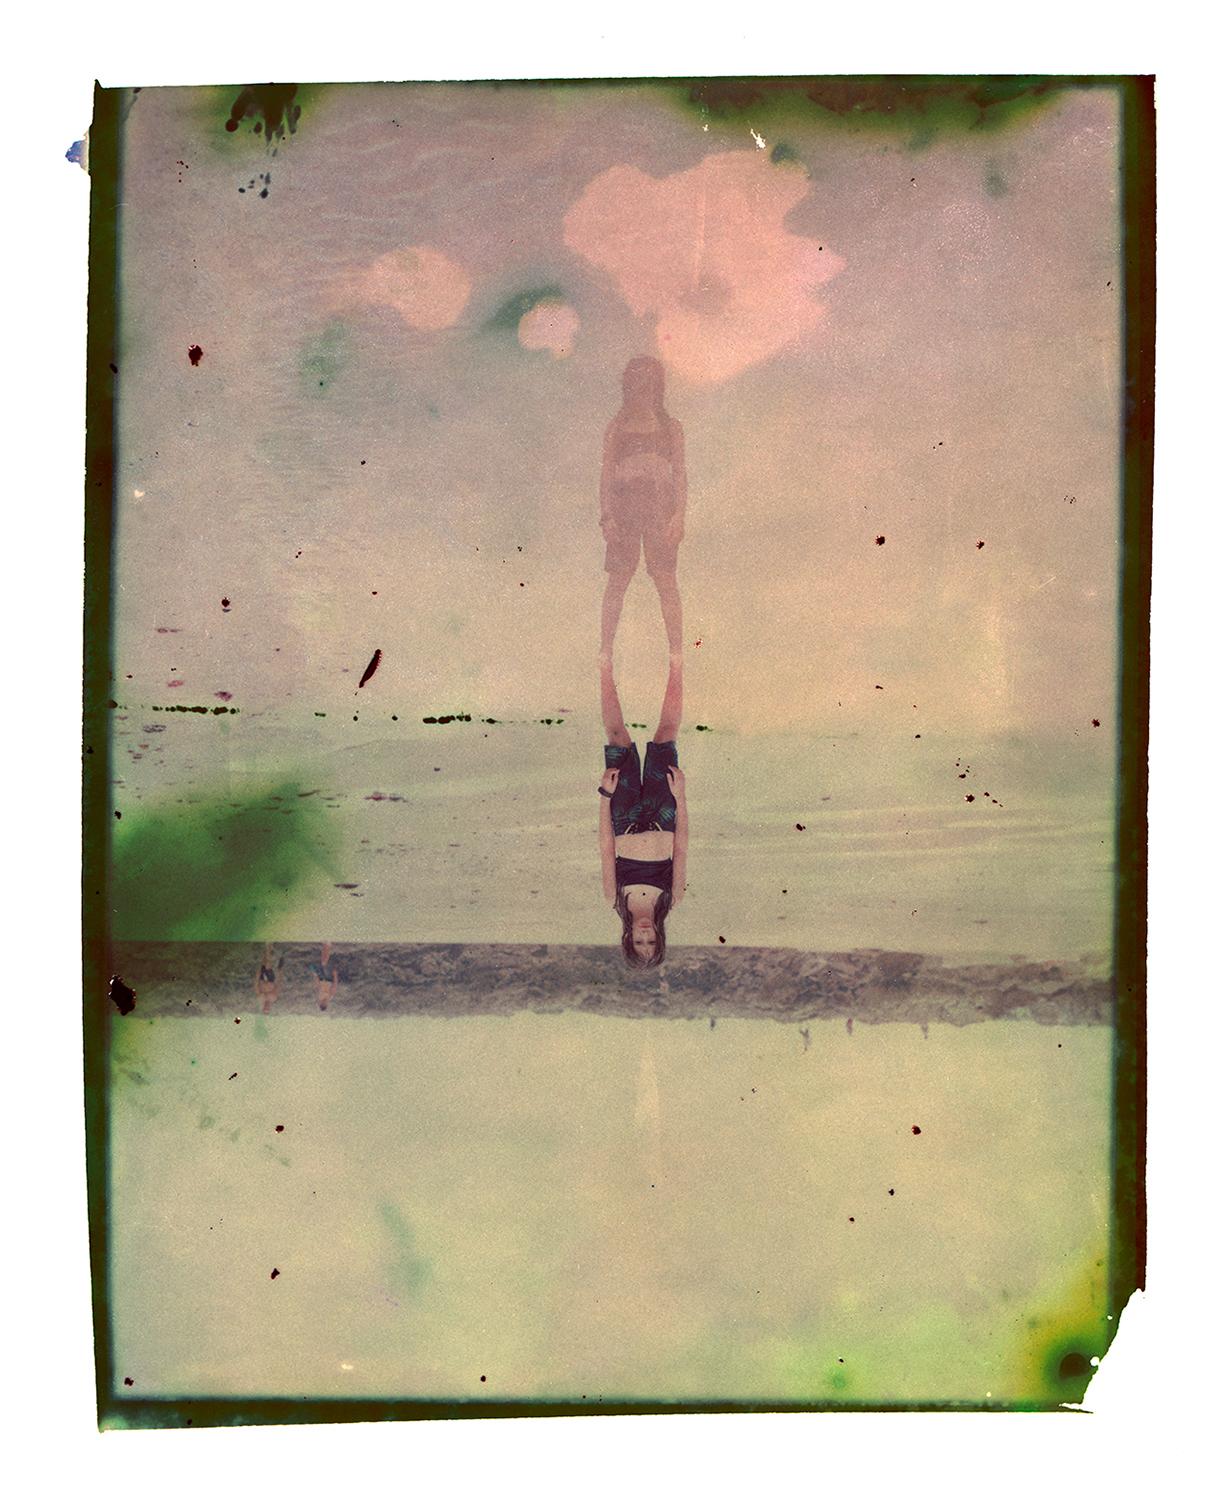 El reflejo  - Contemporary, Polaroid, Fotografie, Kindheit, abstrakt